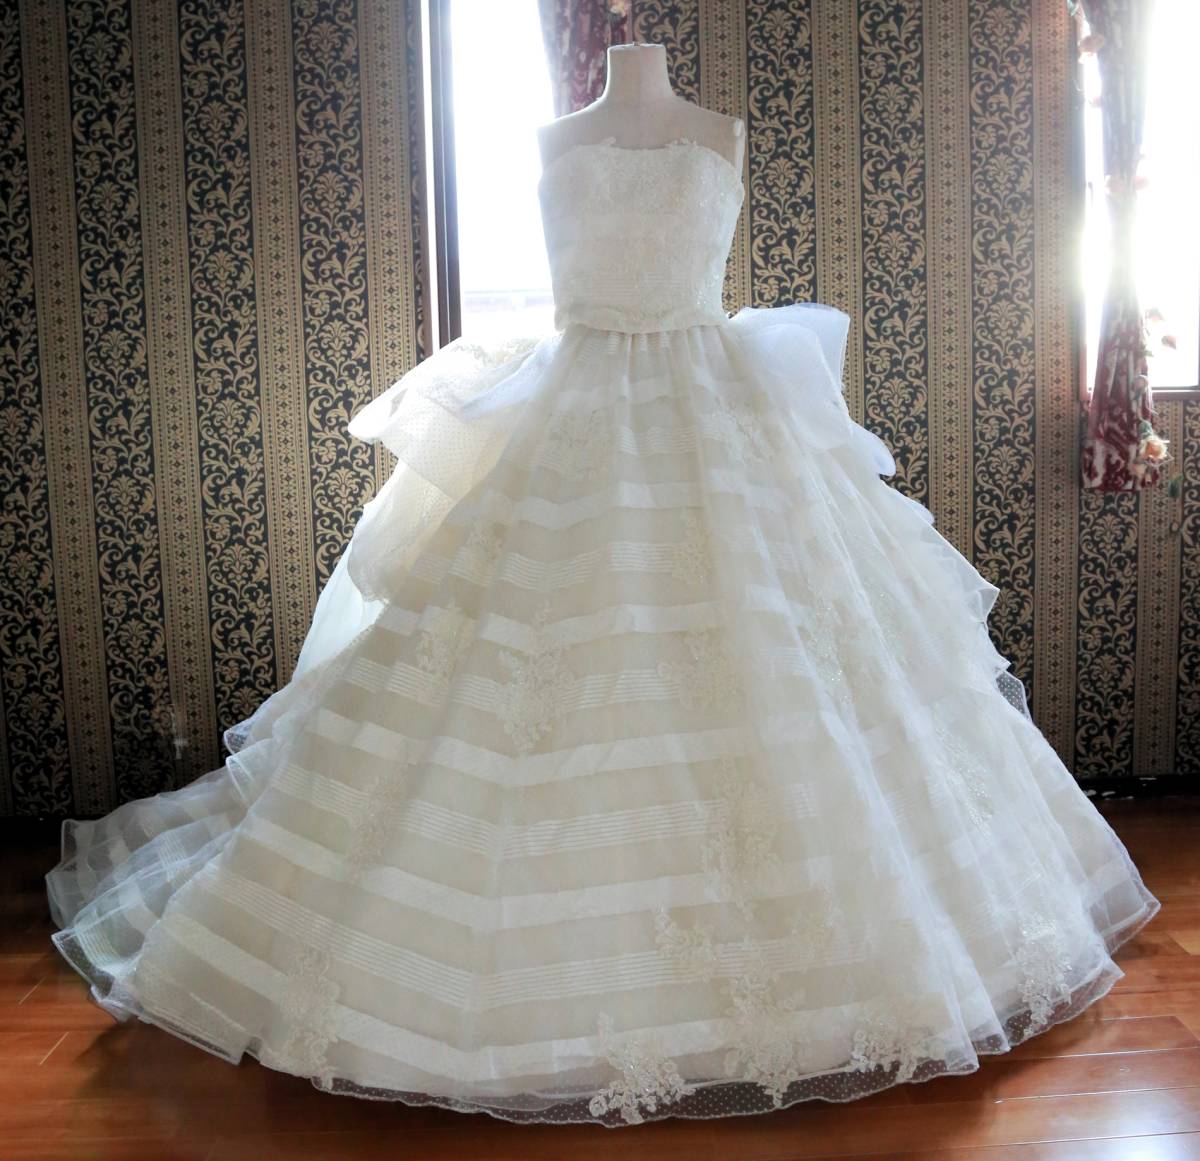  volume enough super-gorgeous Alpha Blanc ka high class wedding dress 9 number 11 number M~L size separate long train 